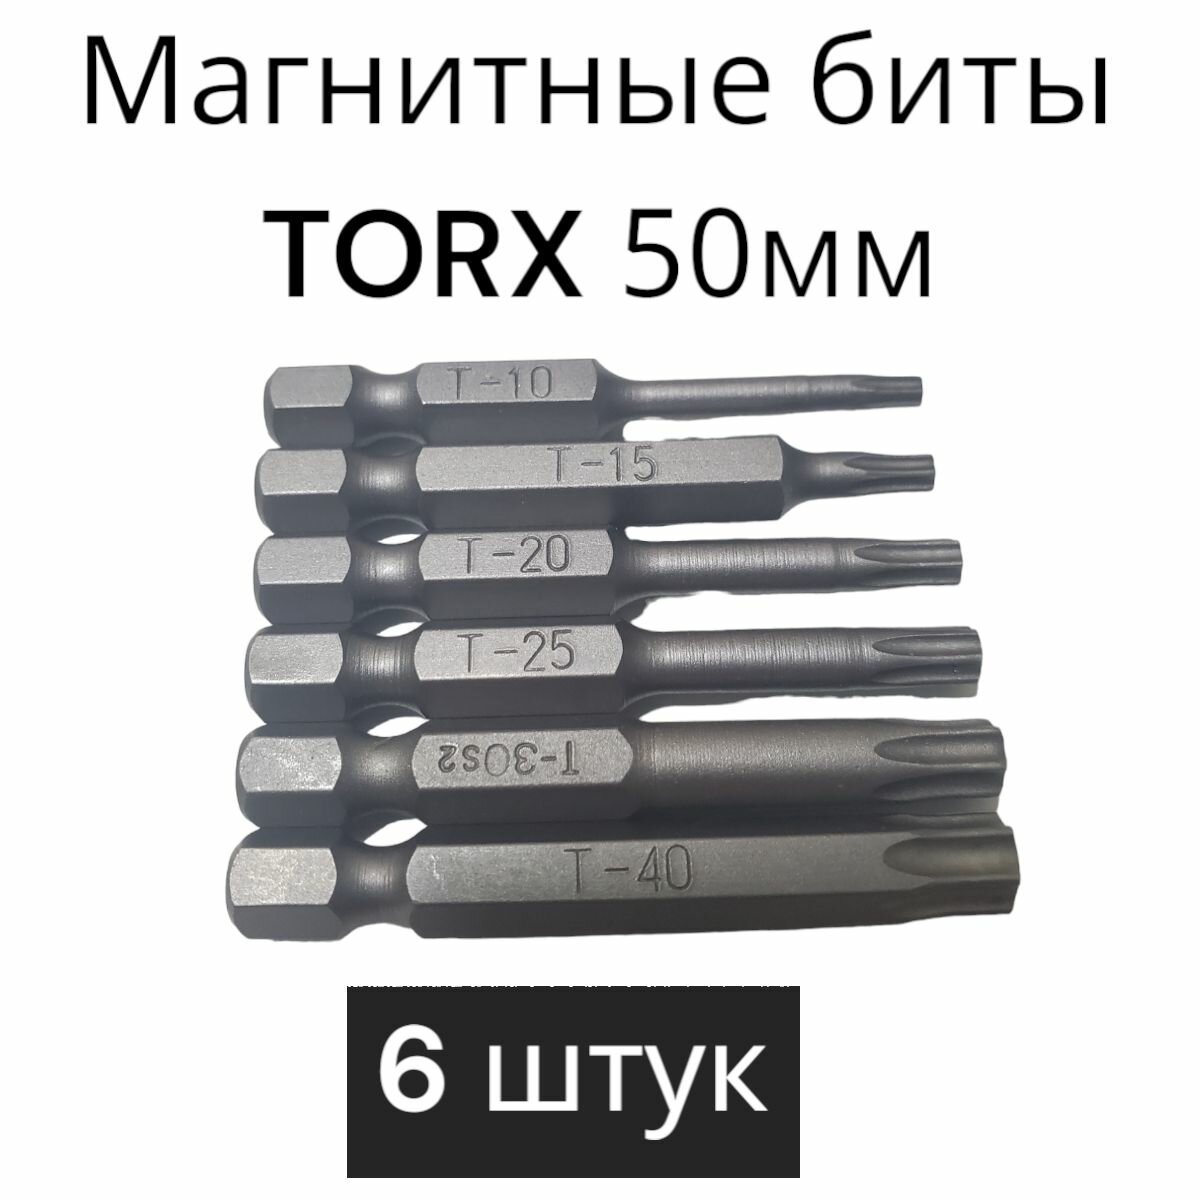 Биты магнитные TORX 50 мм набор 6 штук: T10 T15 Т20 Т25 Т30 Т40/ биты для шуруповертов 50 мм